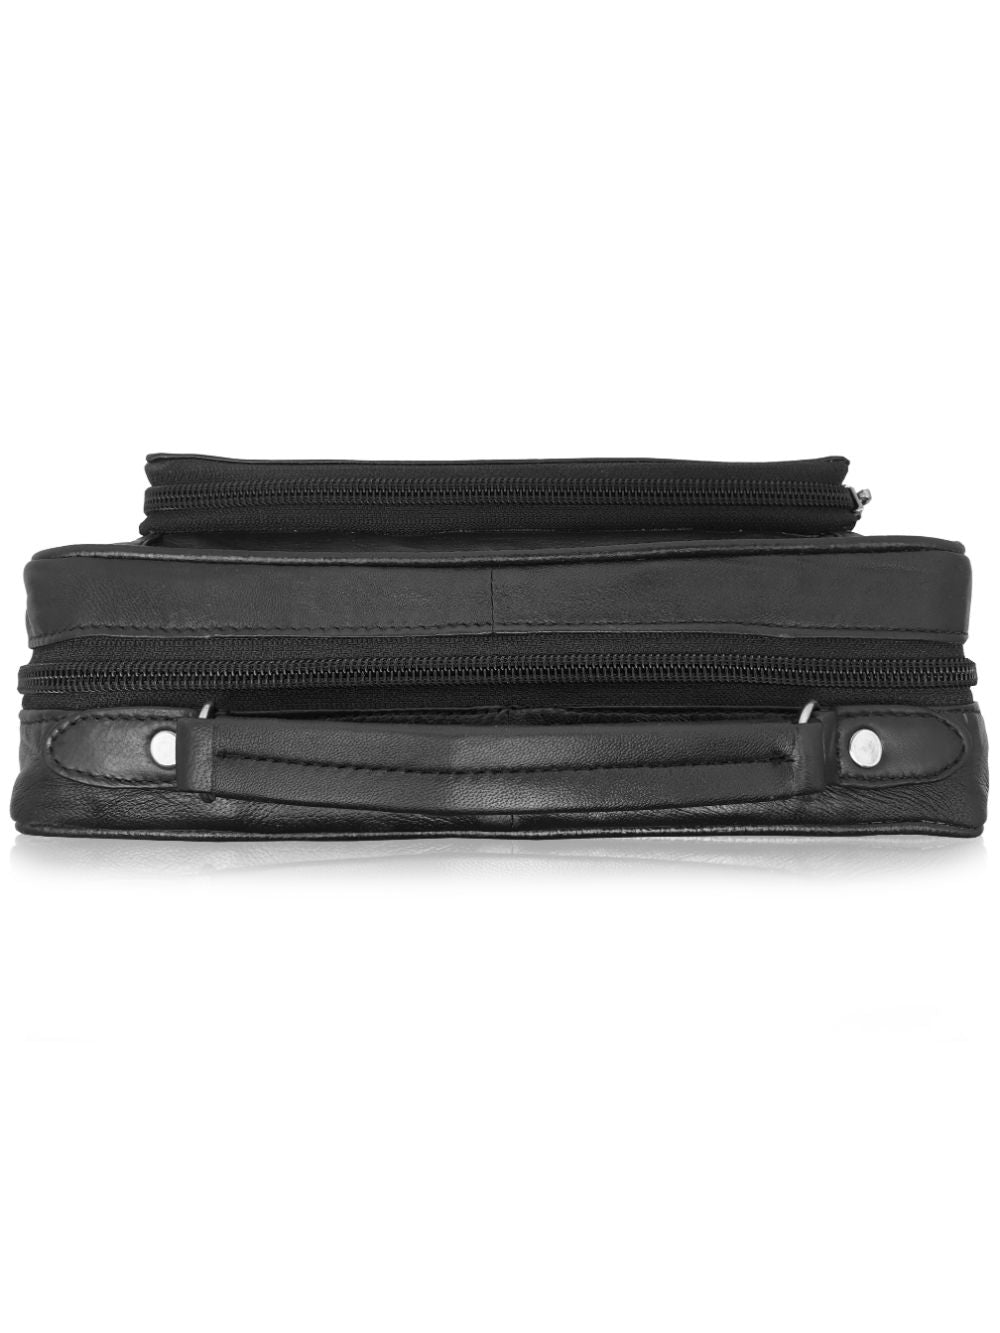 Roamlite Travel Orginizer bag Black Leather RL521 top